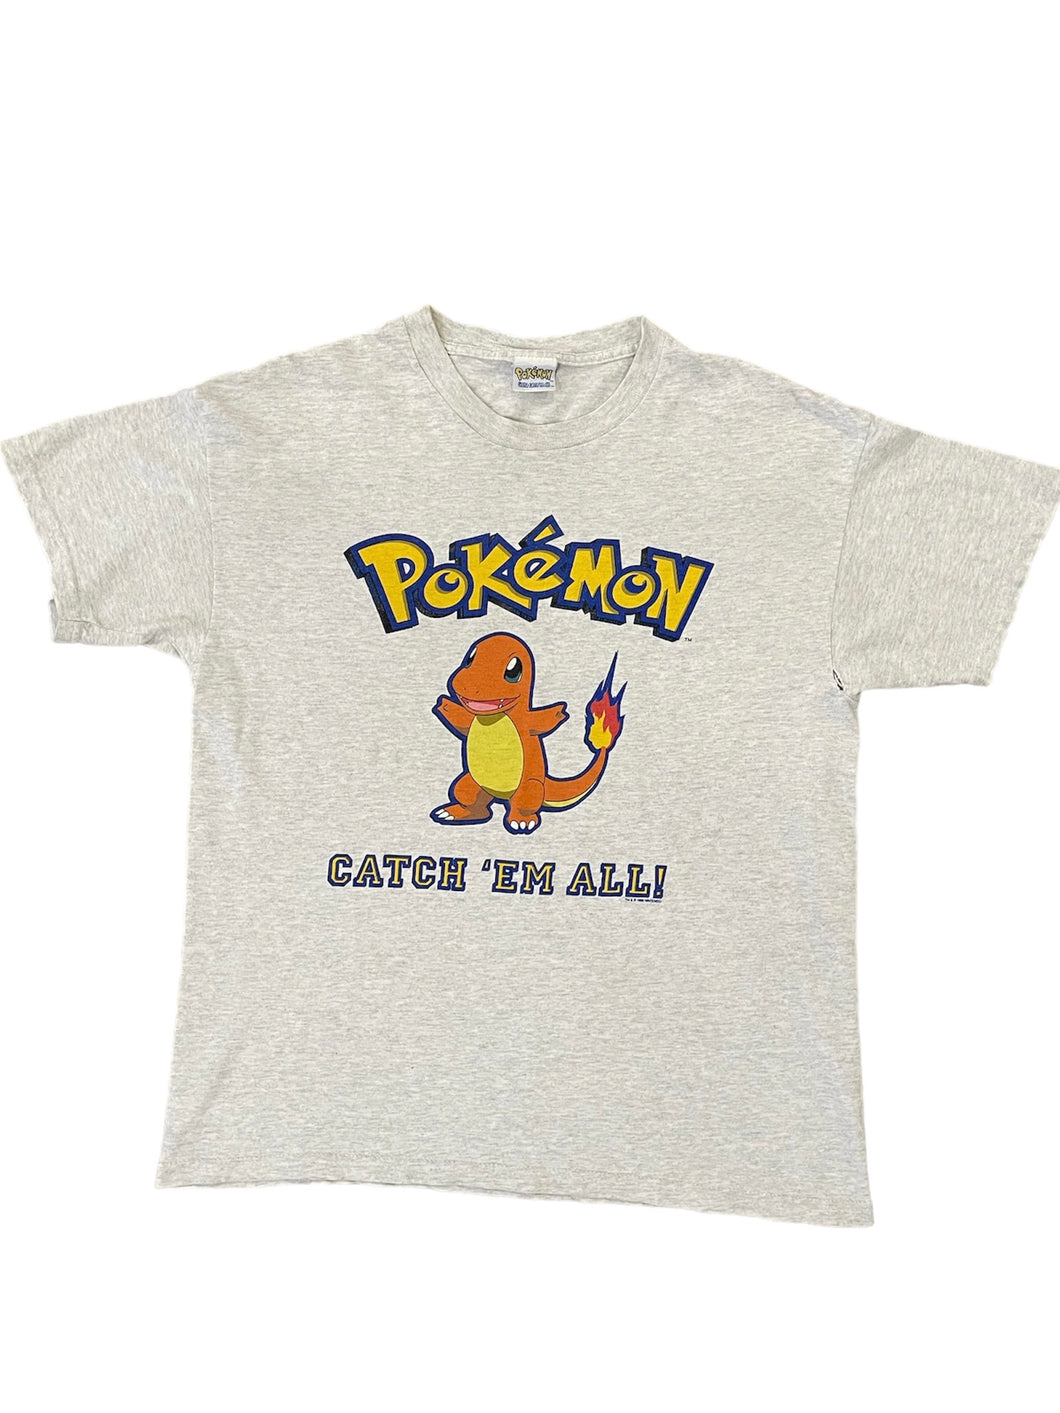 1999 Pokemon Shirt